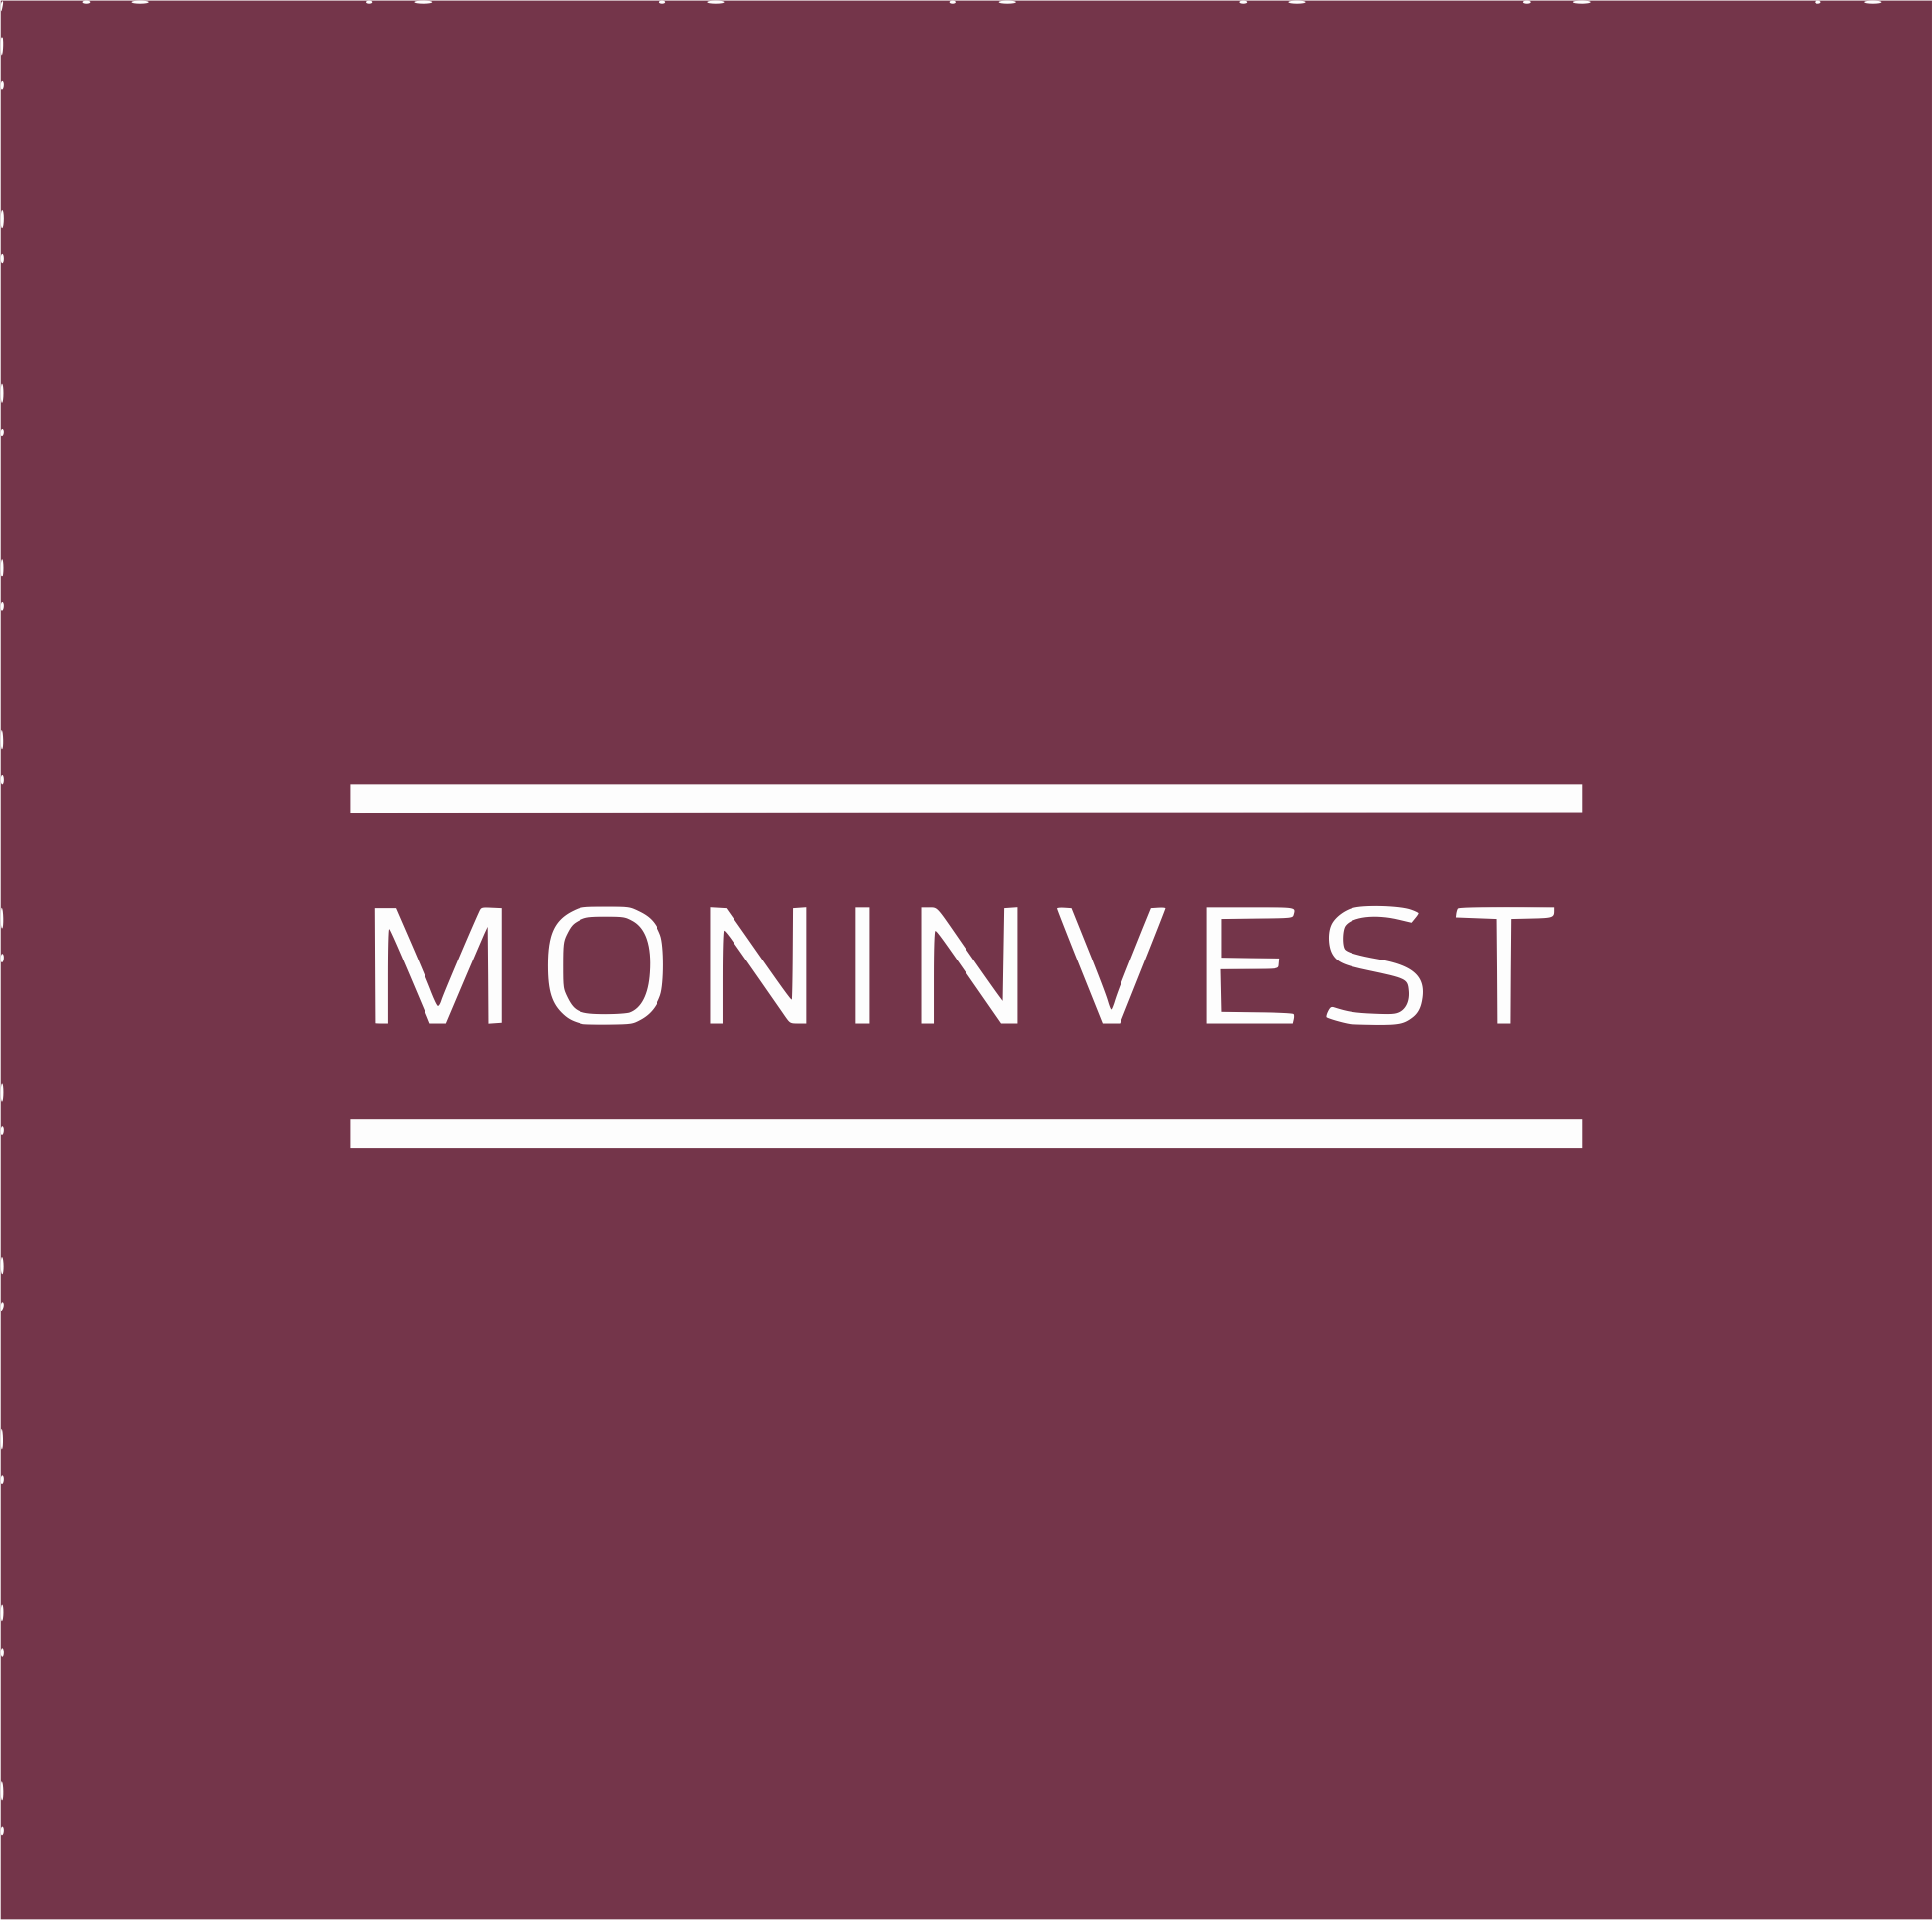 Registration page for MonInvest